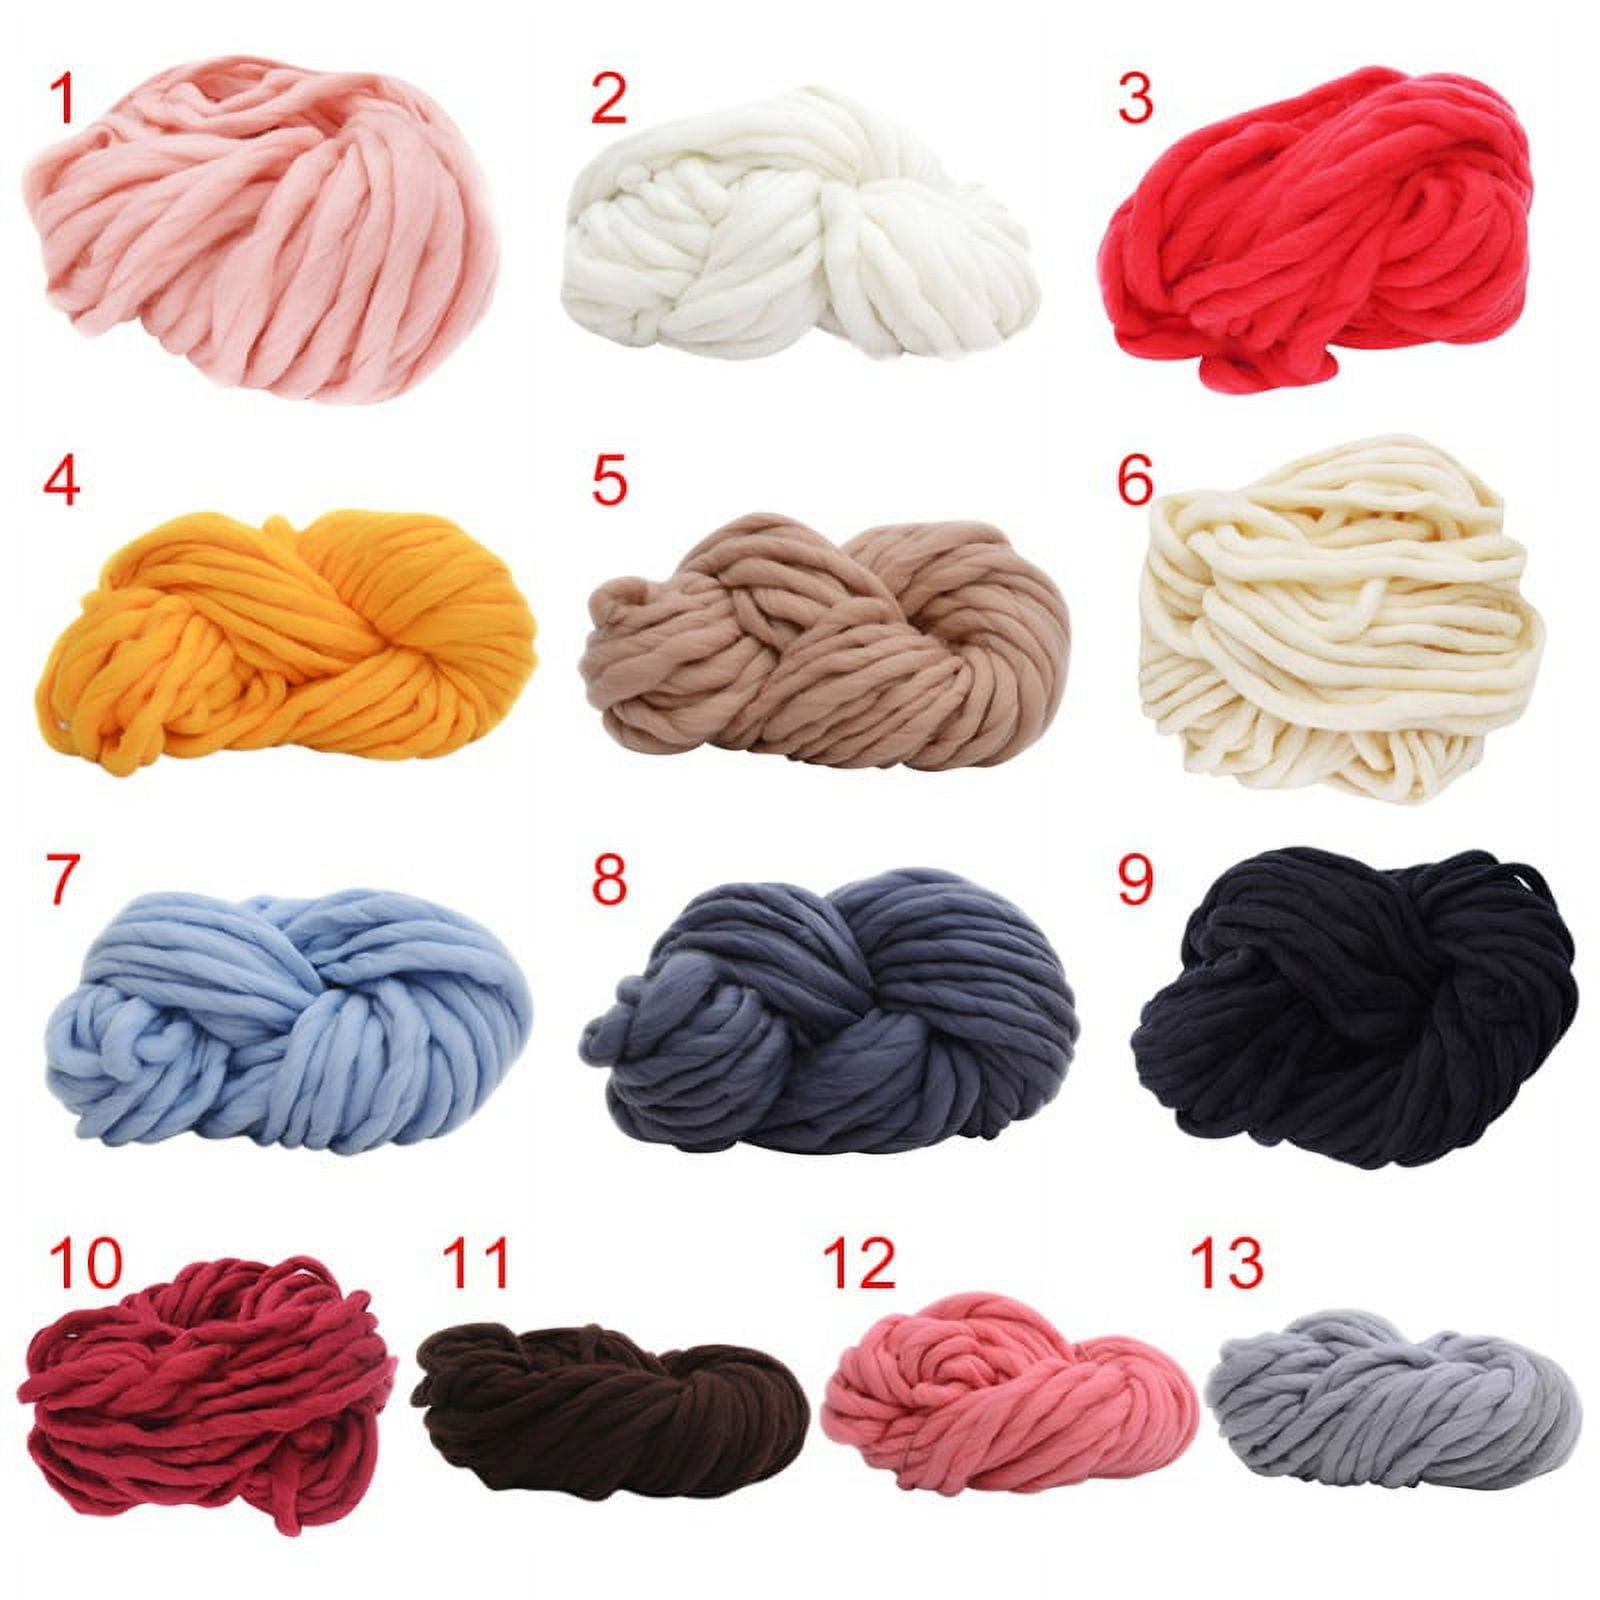 S SERENABLE Chunky Yarn Bulky Arm Knitting Yarn for Braided Knot Throw Blanket,Soft Jumbo Tube Weight Yarn Hand Making Washable Yarn for Blanket, Pet